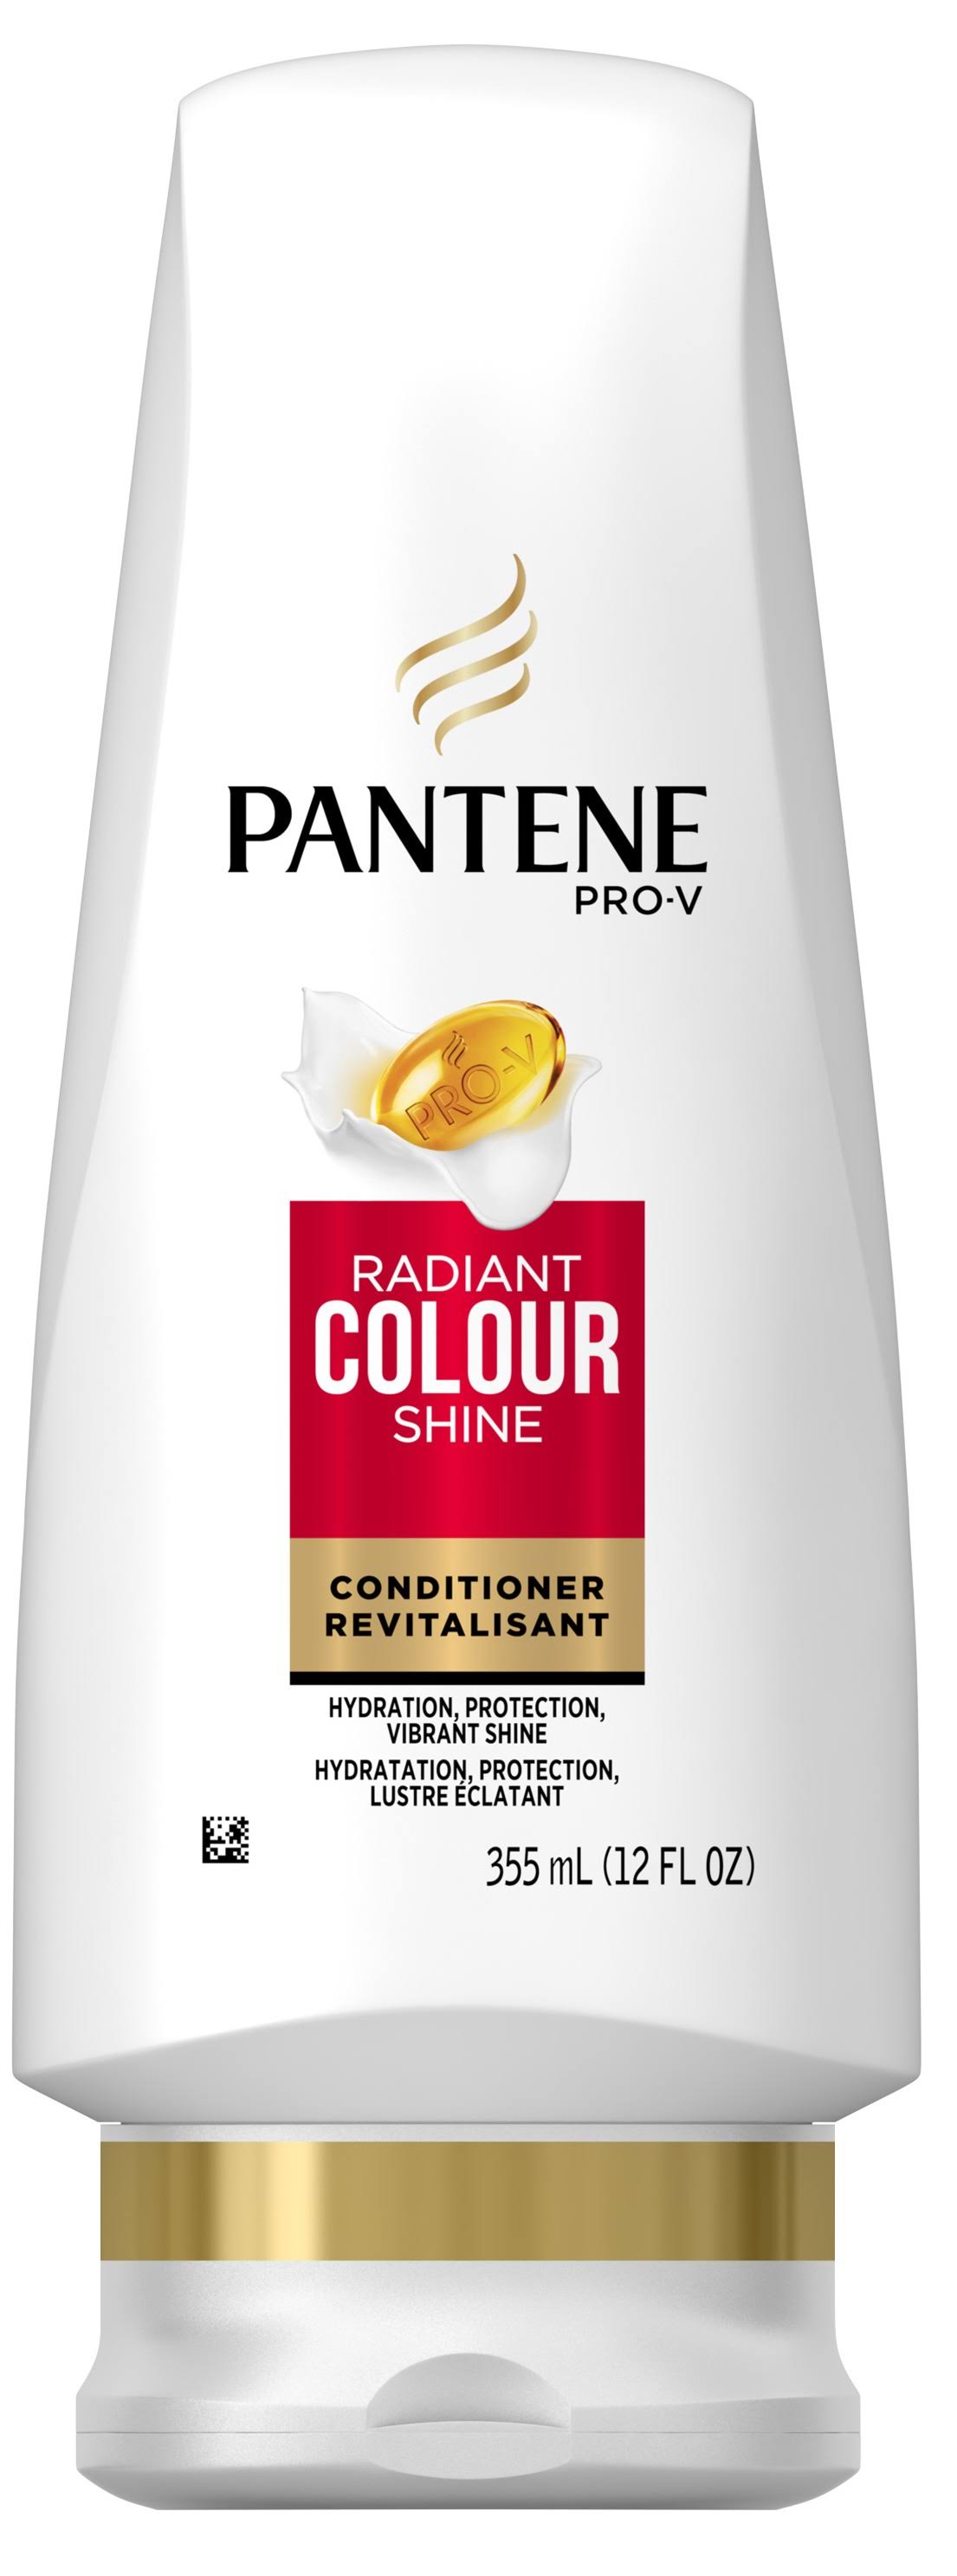 Pantene Pro-V Radiant Colour Shine Conditioner - 375ml